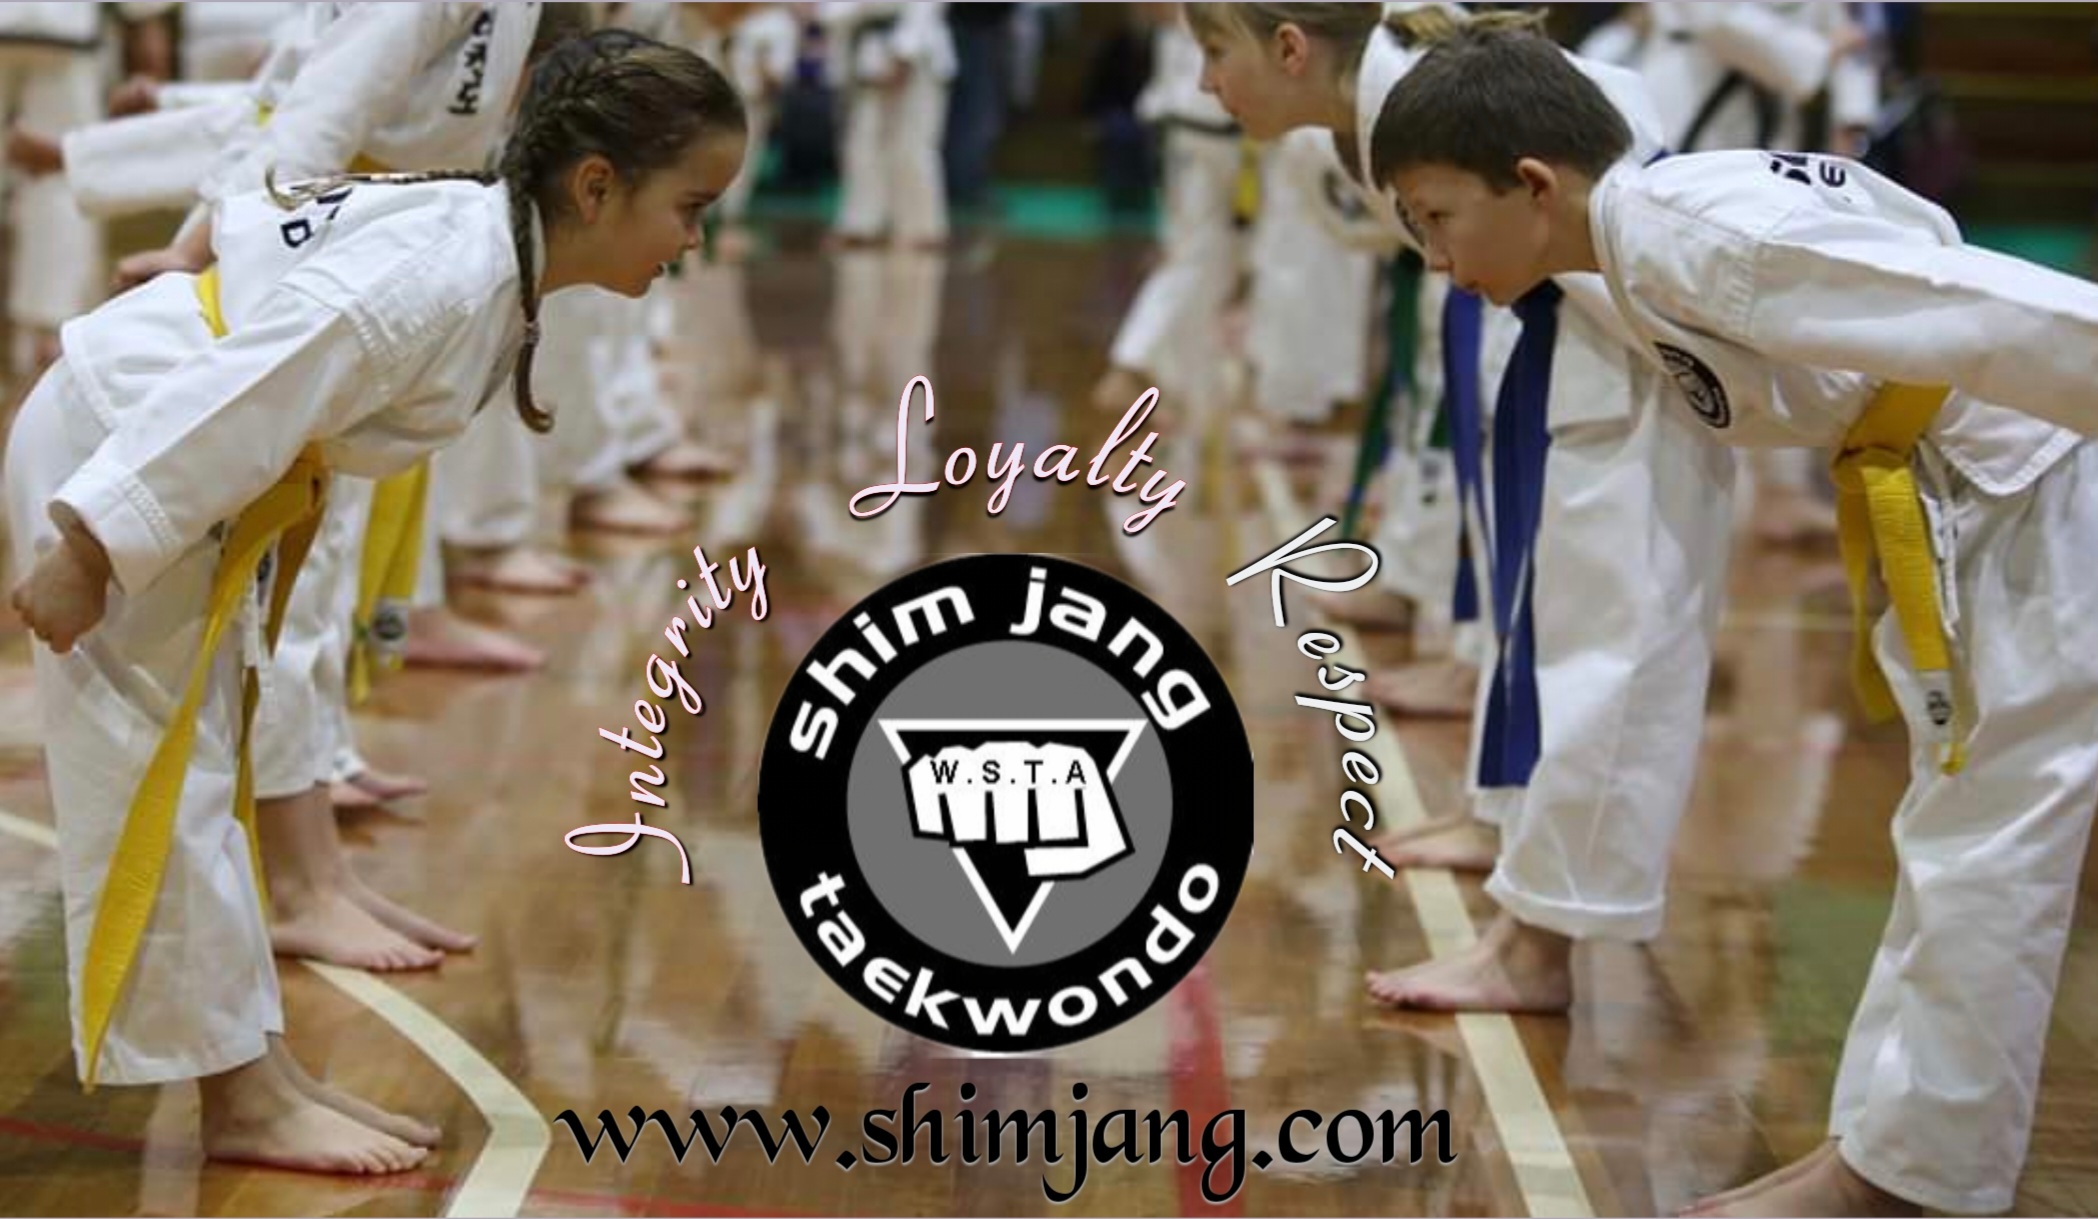 Shimjang Taekwondo